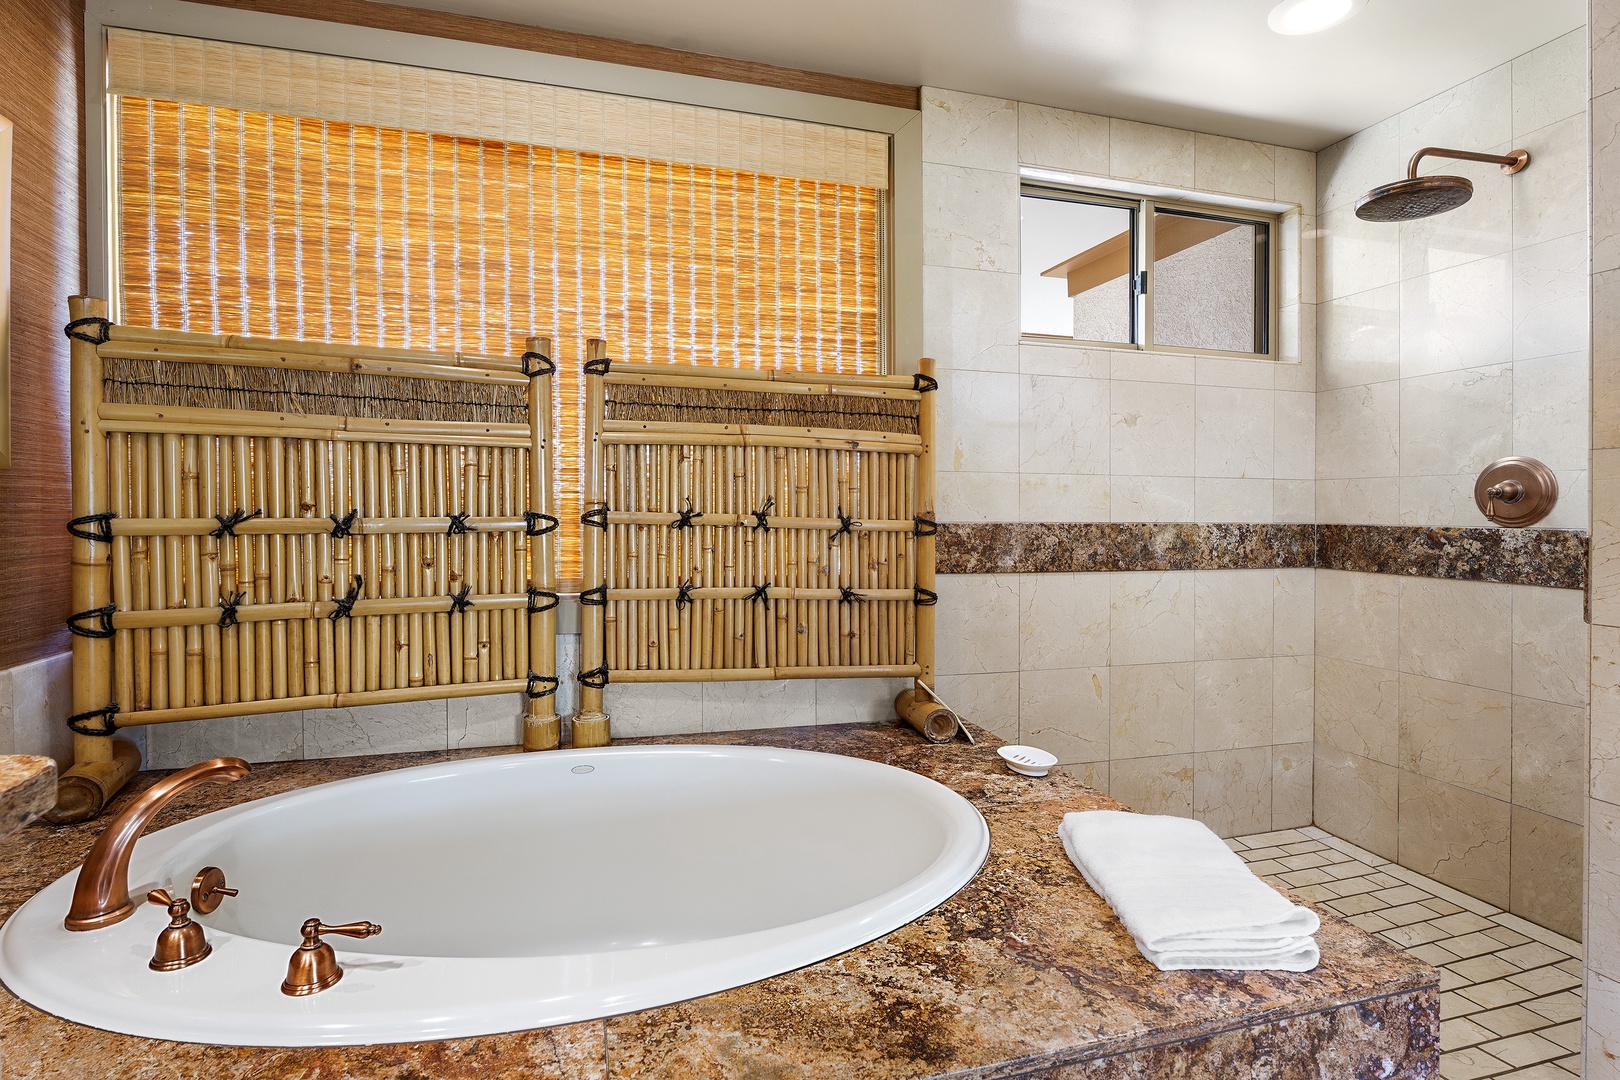 Kamuela Vacation Rentals, Champion Ridge #35 - Large soaking tub to let your stresses melt away